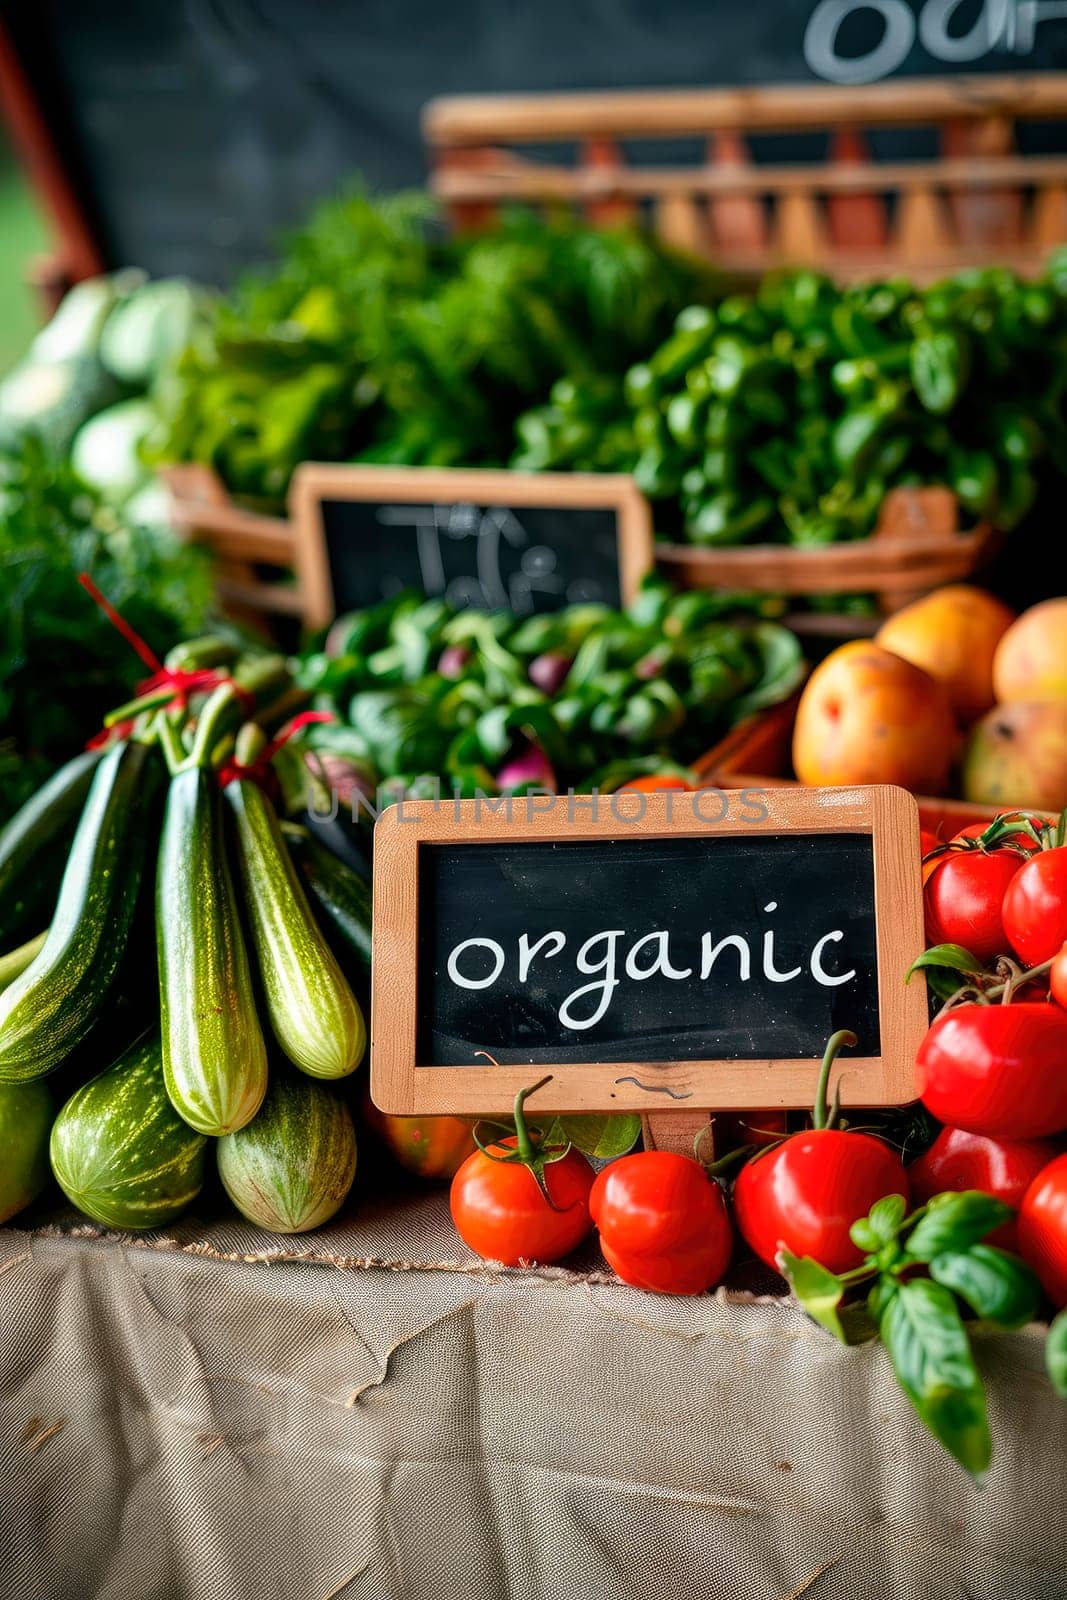 organic sign at the vegetable market. selective focus. by yanadjana